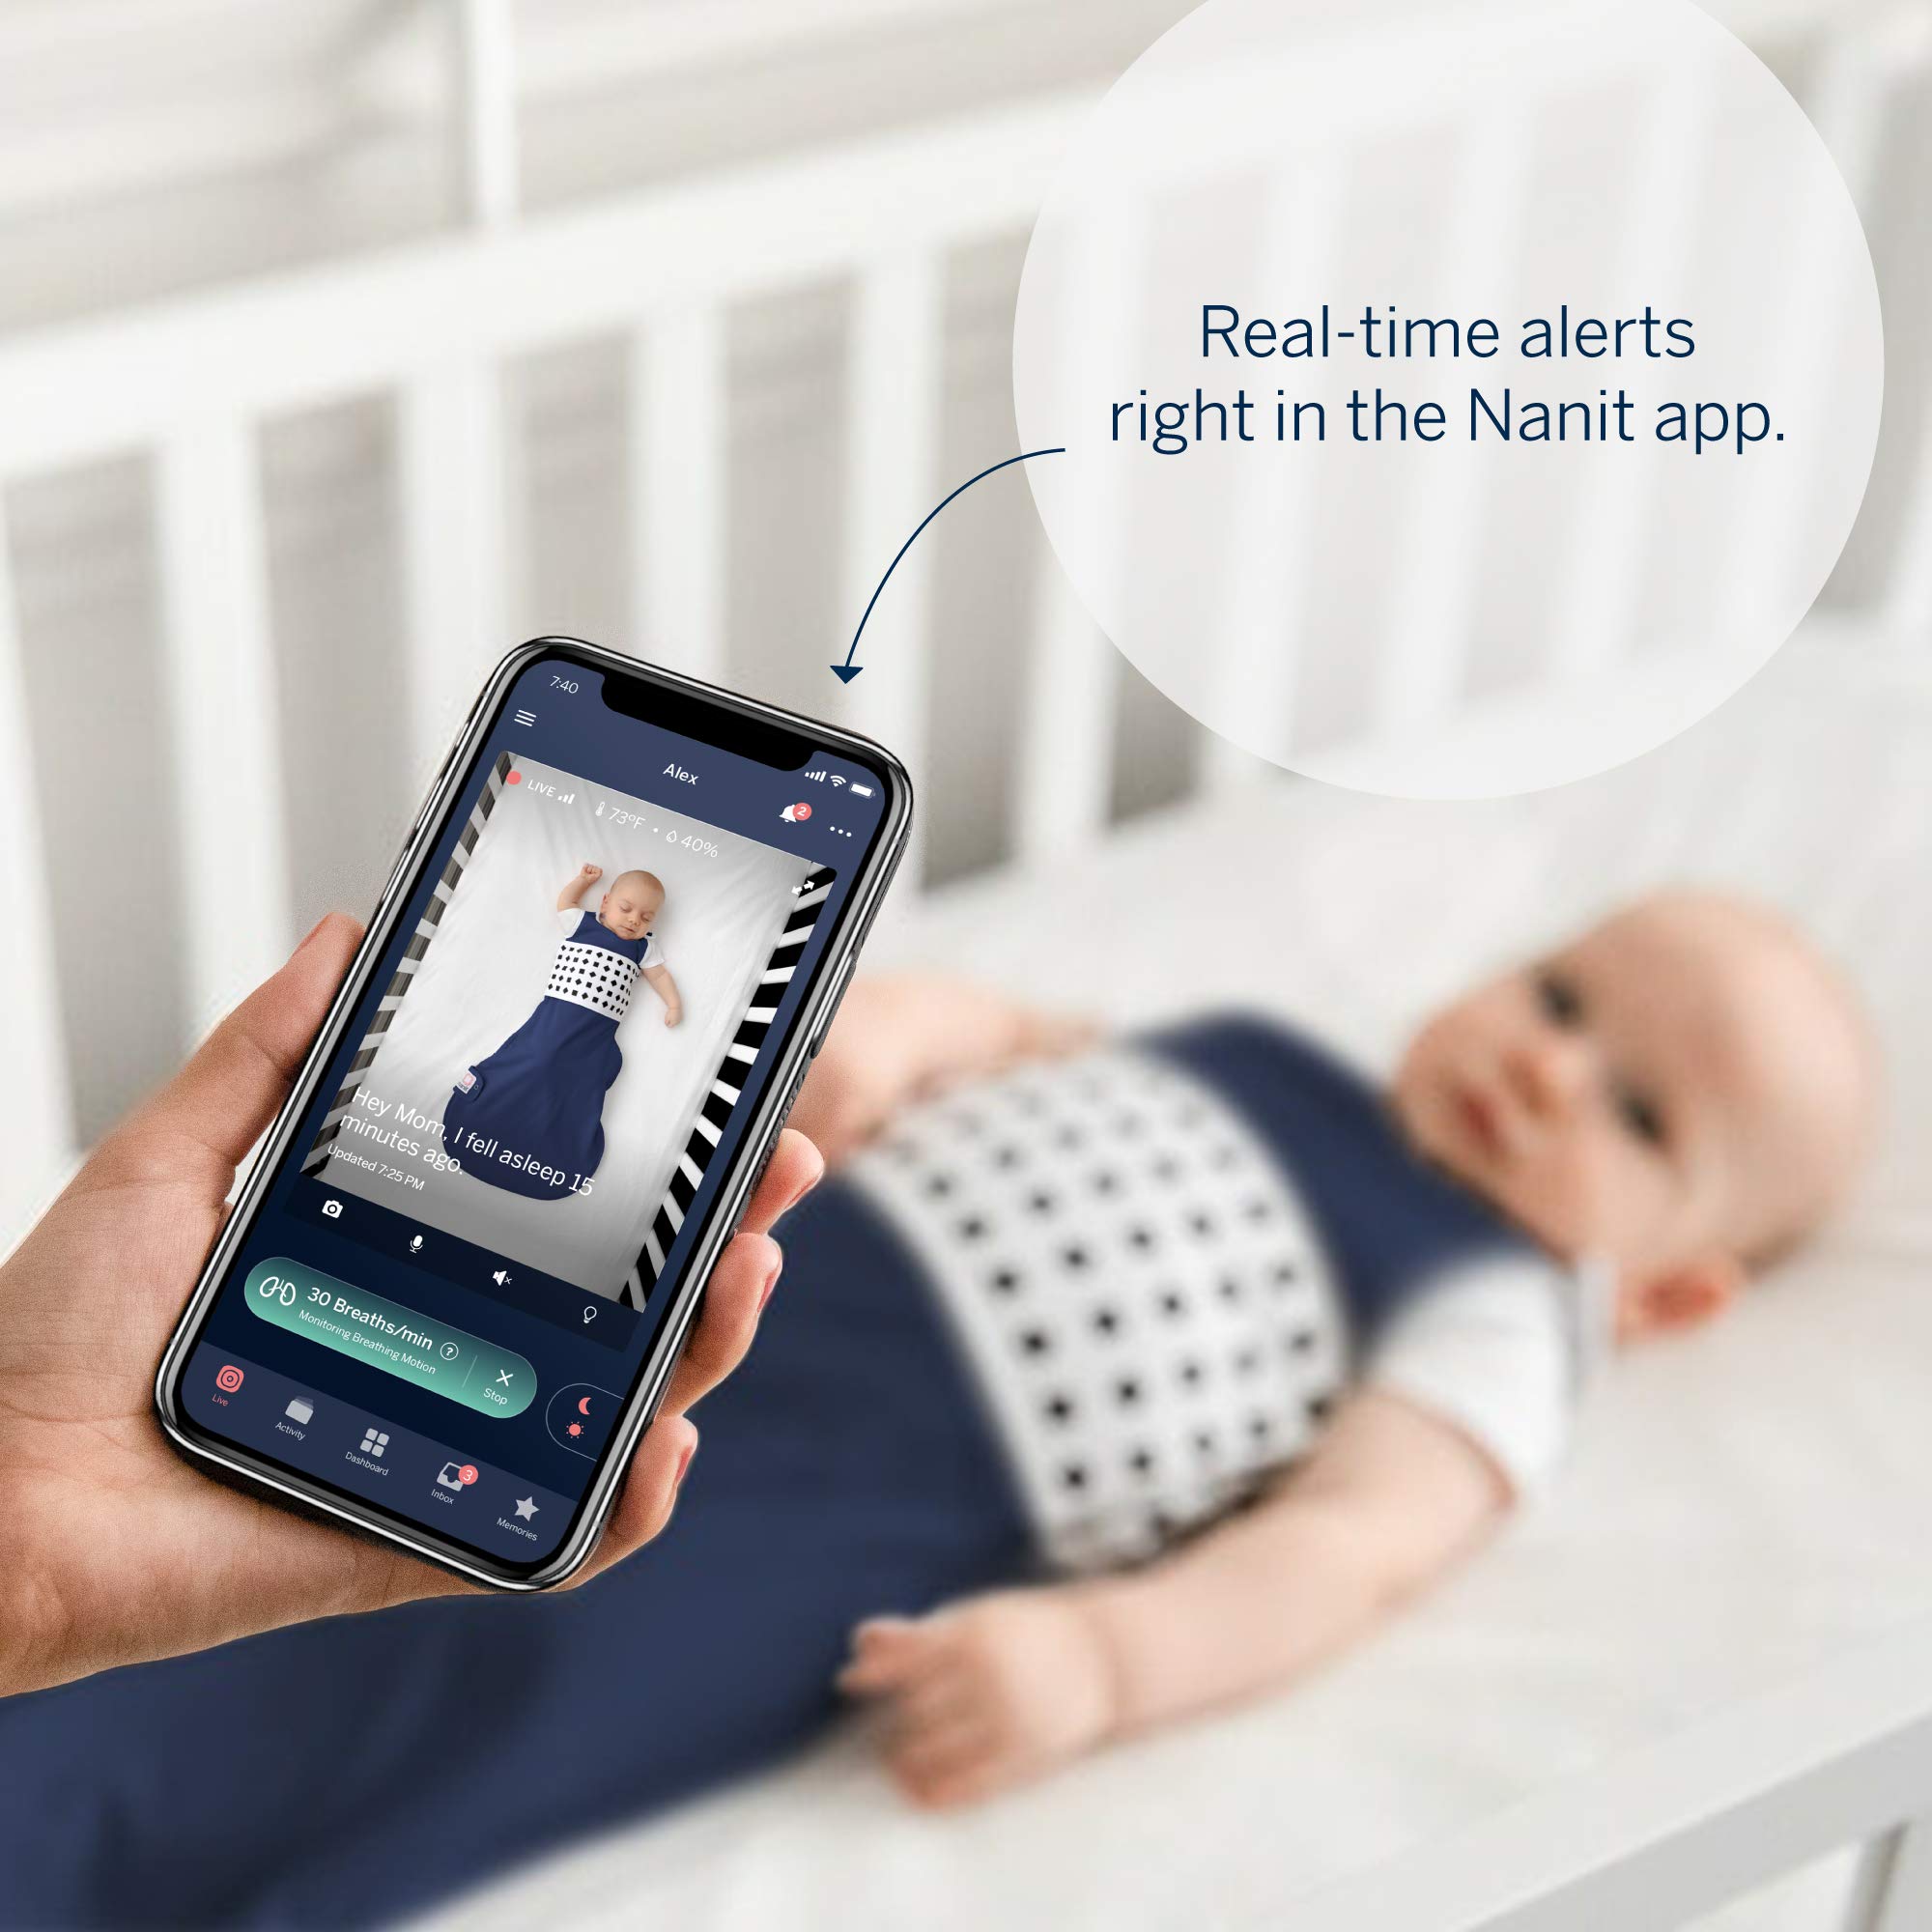 Nanit Breathing Wear Sleeping Bag 100% Cotton Baby Sleep Sack - Works Pro Baby Monitor to Track Breathing Motion Sensor-Free, Real-Time Alerts, Size Medium, 6-12 Months, Midnight Blue